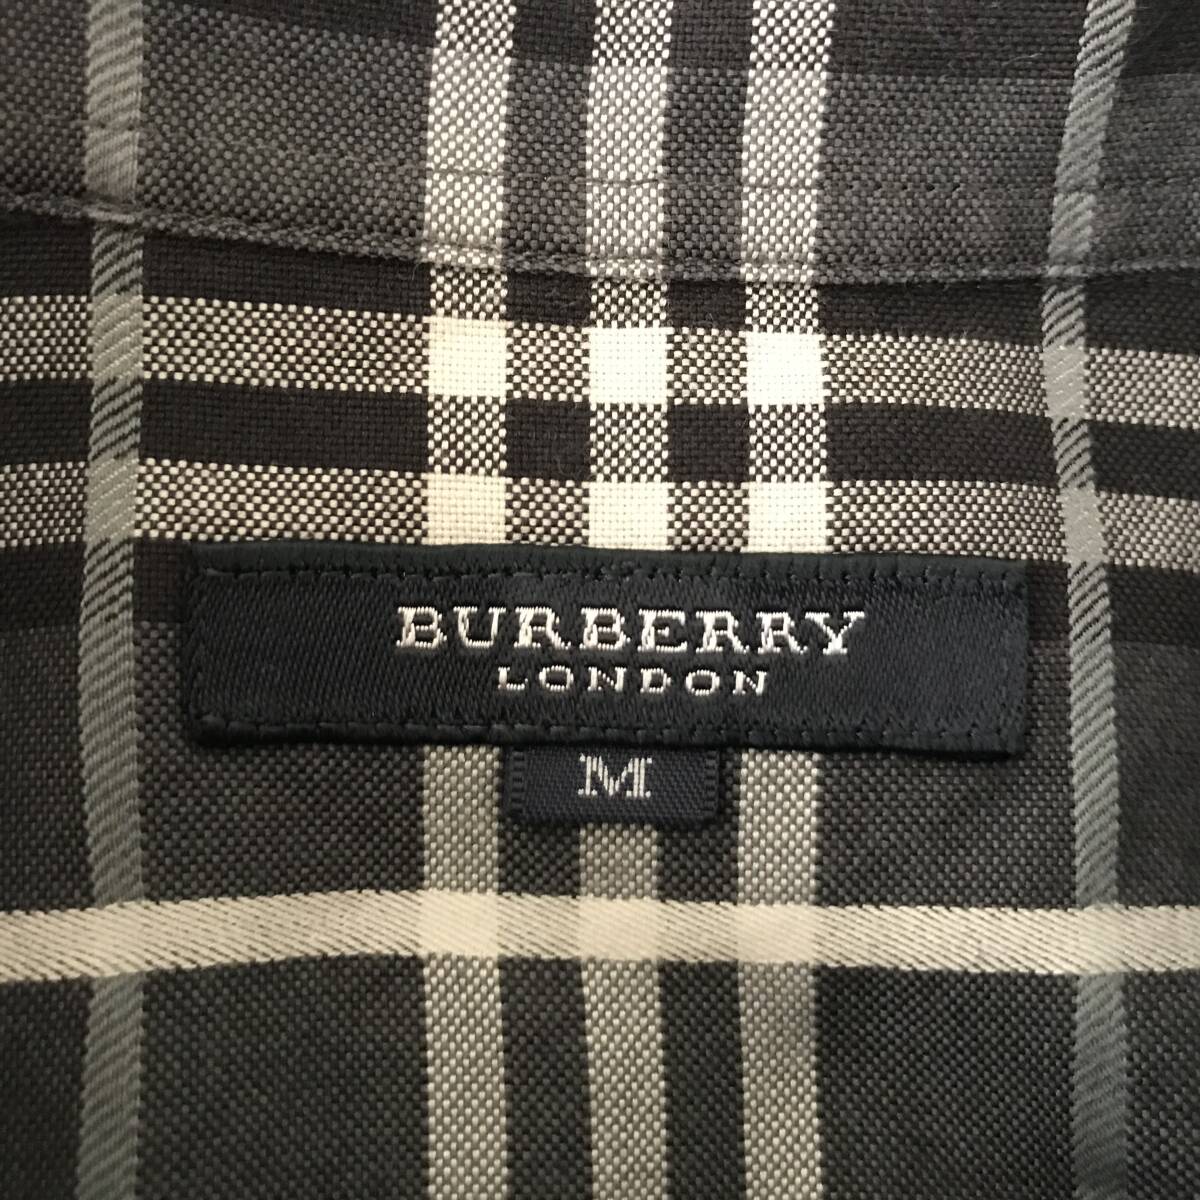 BURBERRY LONDON バーバリー メンズ 半袖チェック柄シャツ 三陽商会/日本製 美品 size Mの画像4